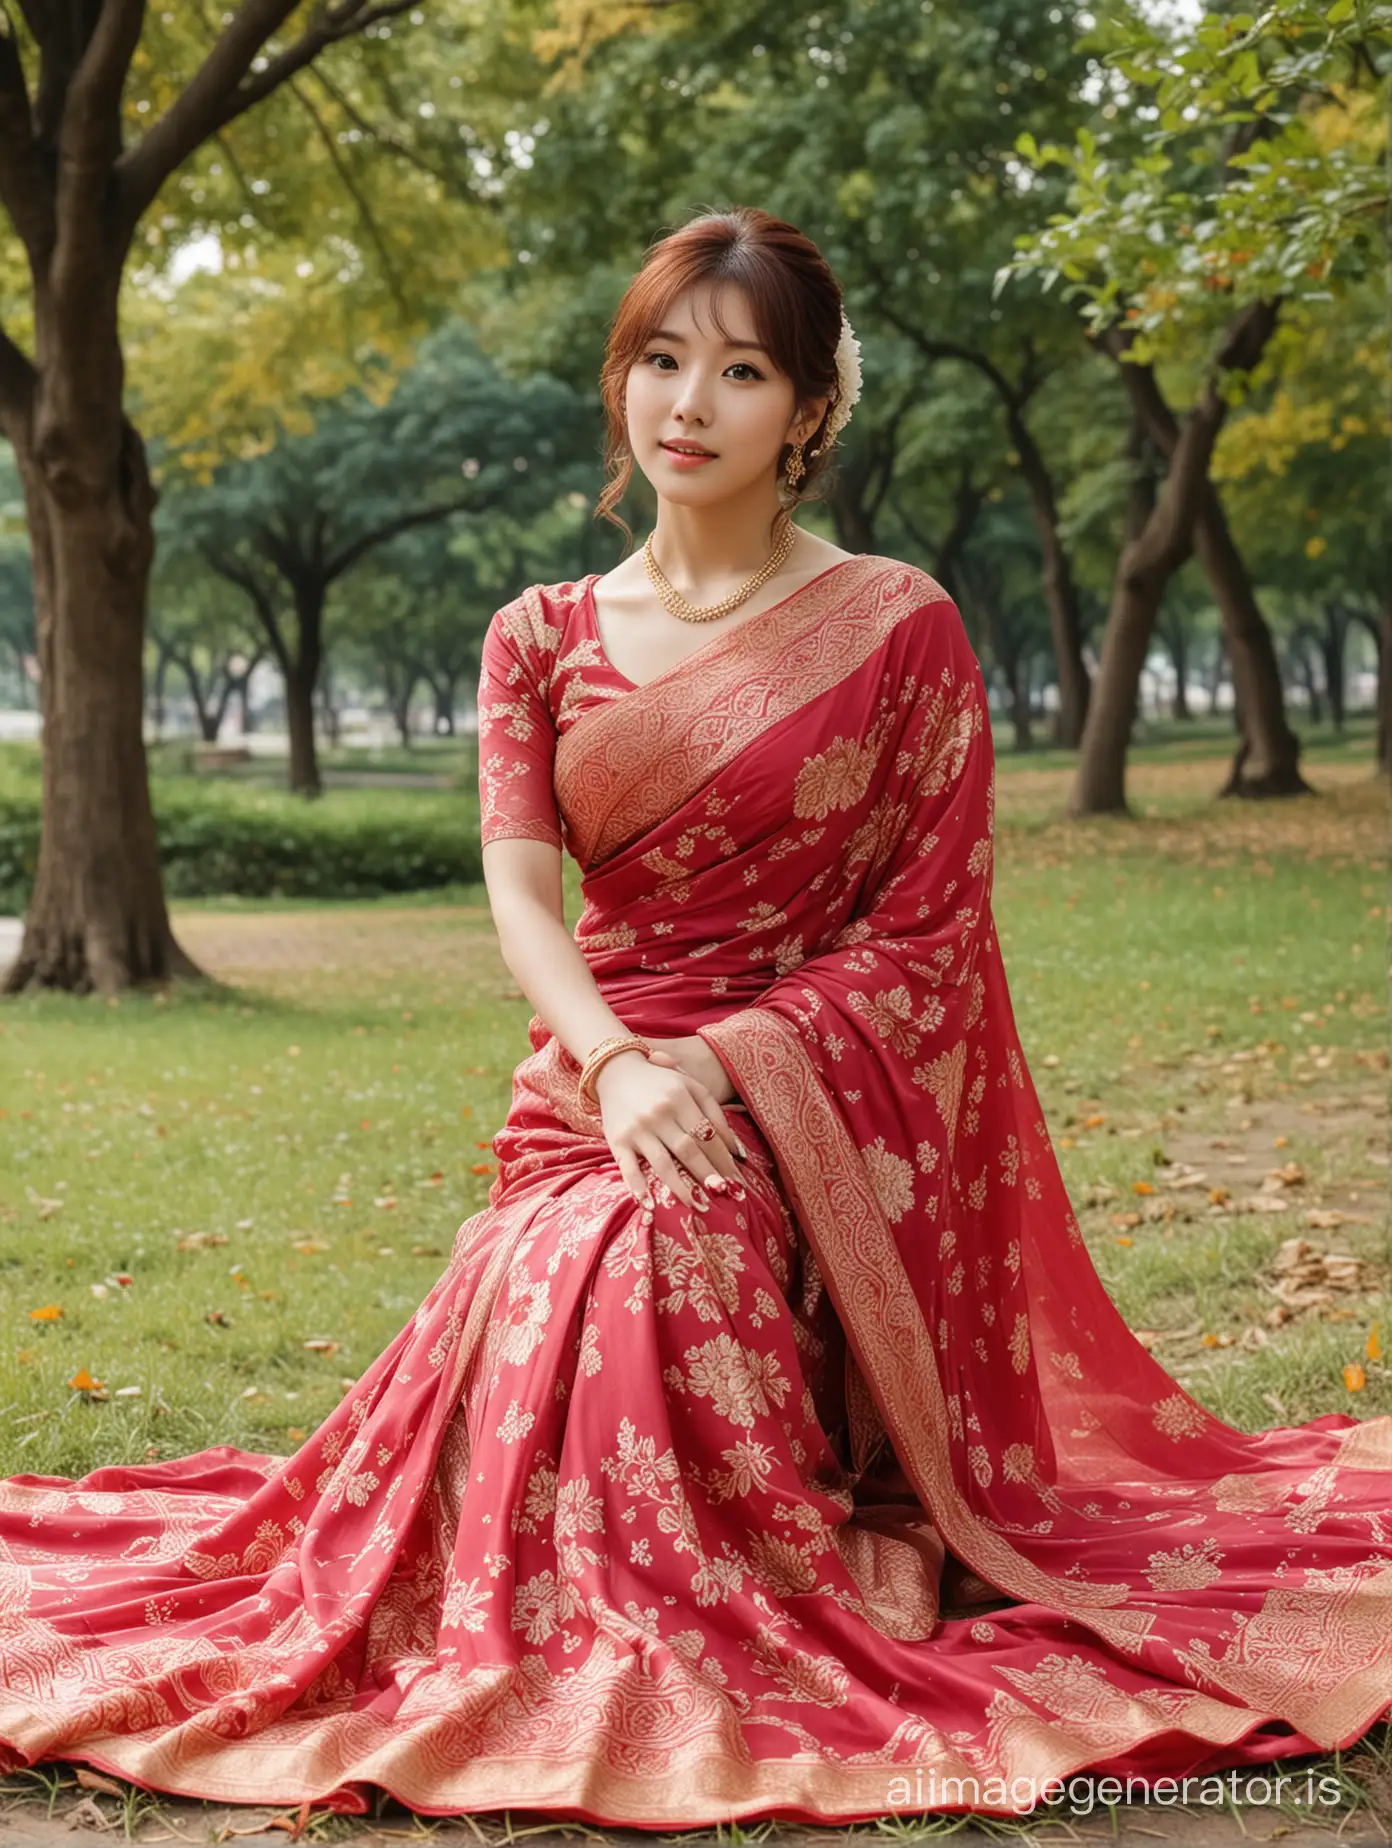 Elegant-Jun-Hyoseong-Gracefully-Adorns-Traditional-Indian-Saree-in-Serene-Park-Setting